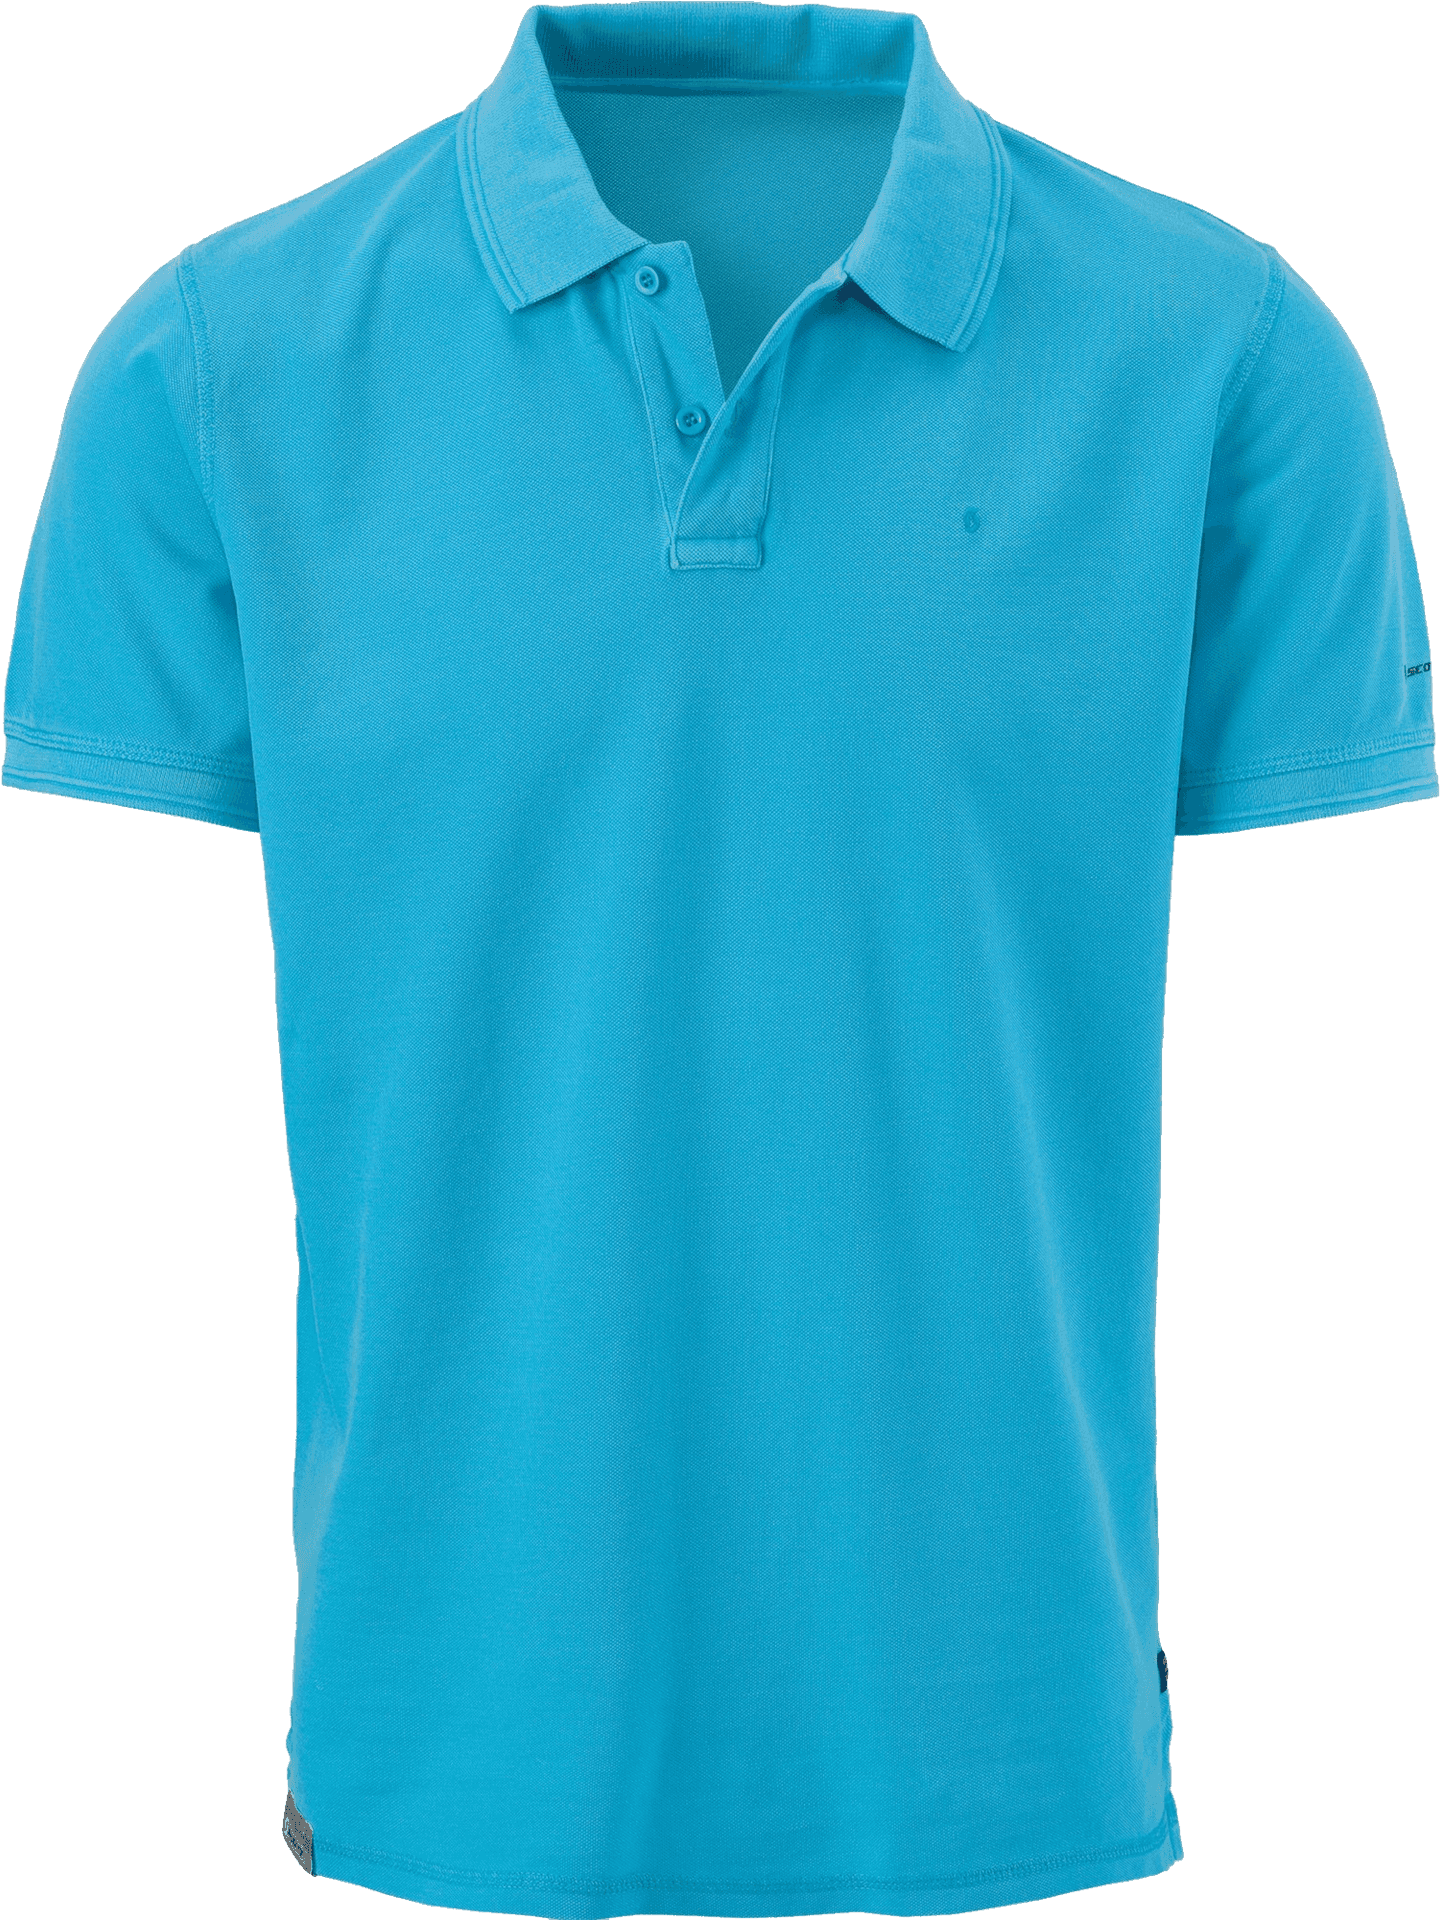 Blue Polo Shirt Product Image PNG image